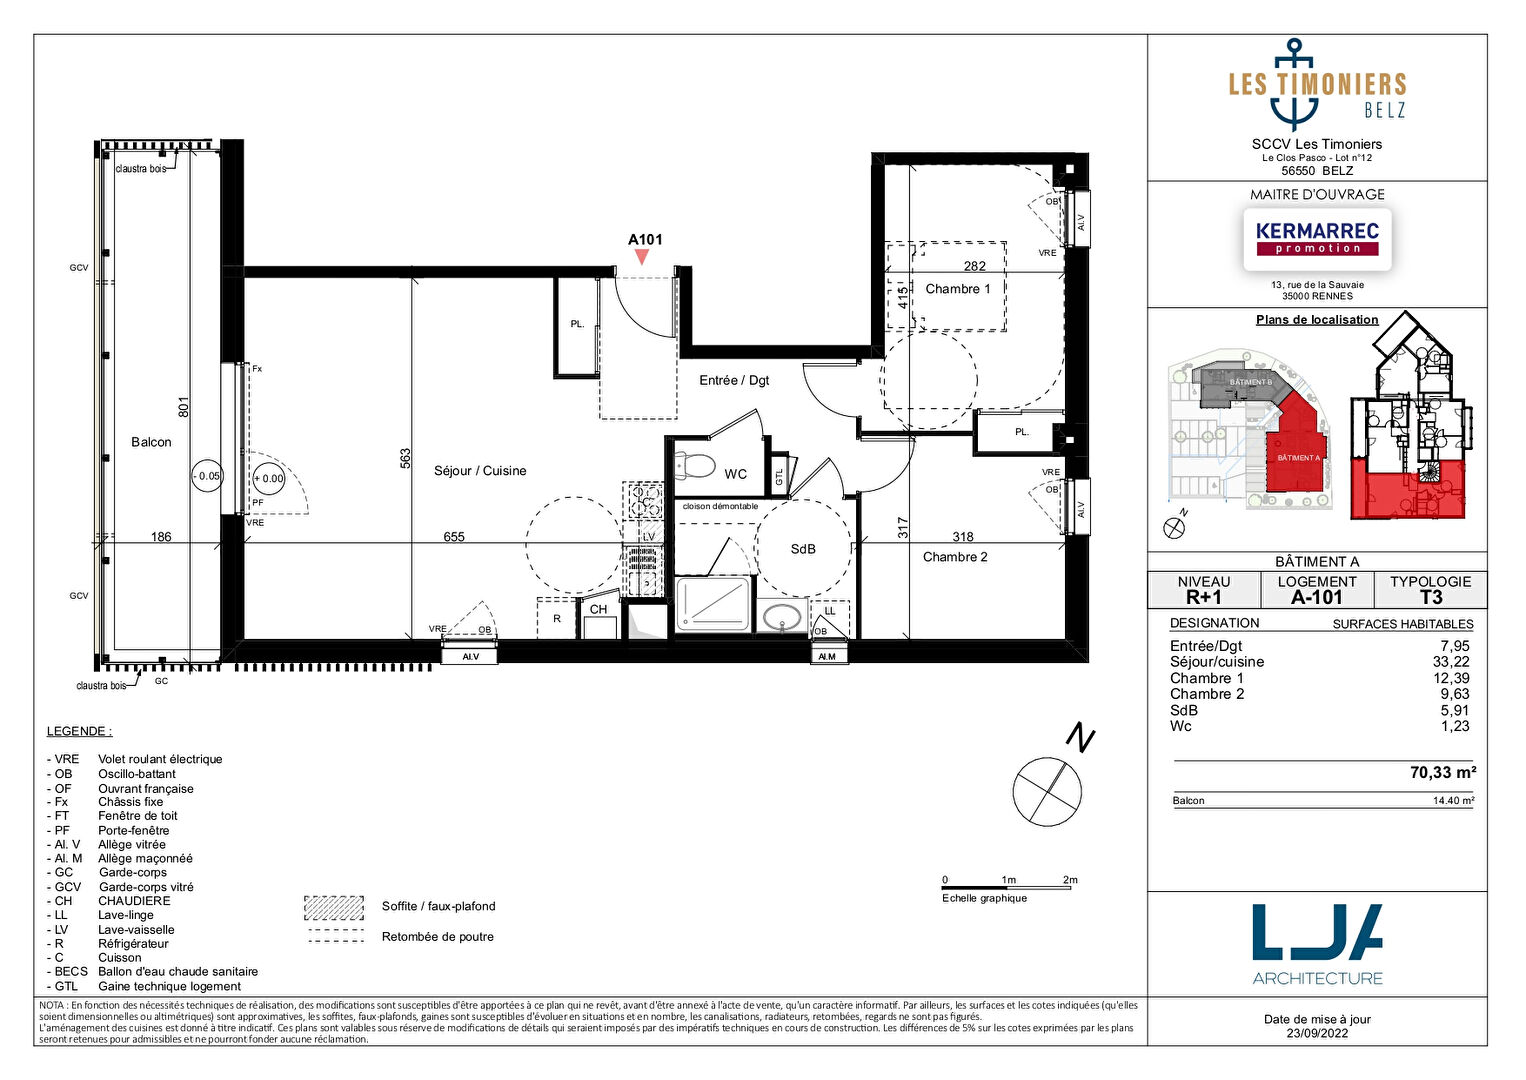 Appartement 3 pièces - 70 m² environ - 50991439c.jpg | Kermarrec Habitation